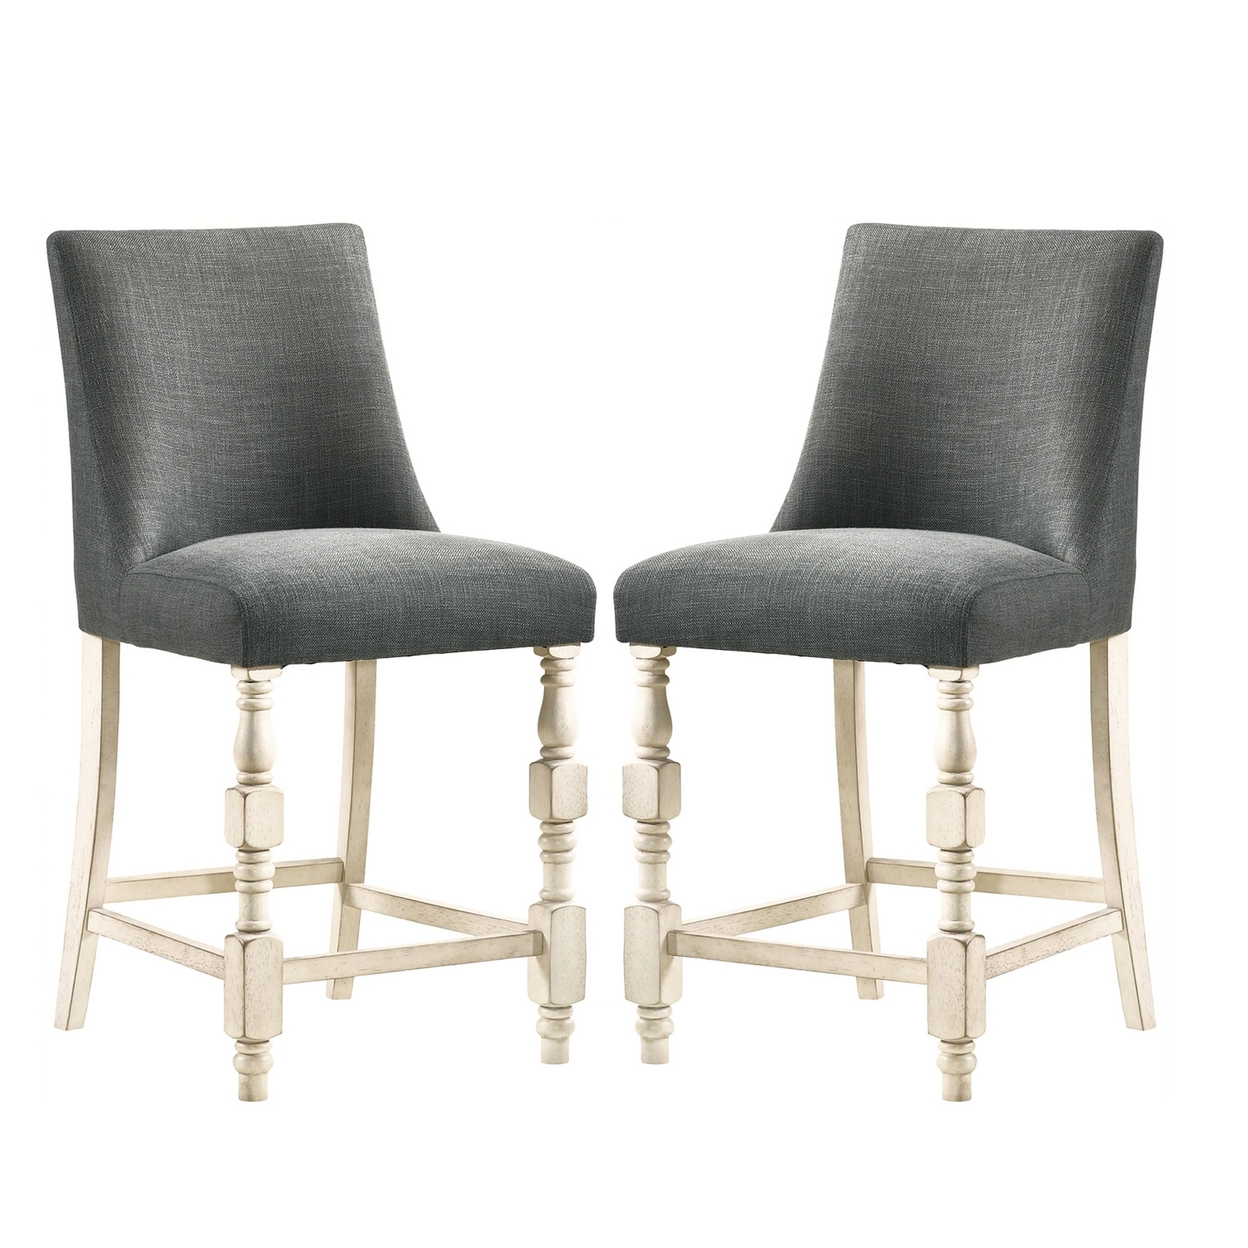 Swan 26 Inch Counter Height Chair, Set Of 2, Gray Seat, Ivory Turned Legs- Saltoro Sherpi